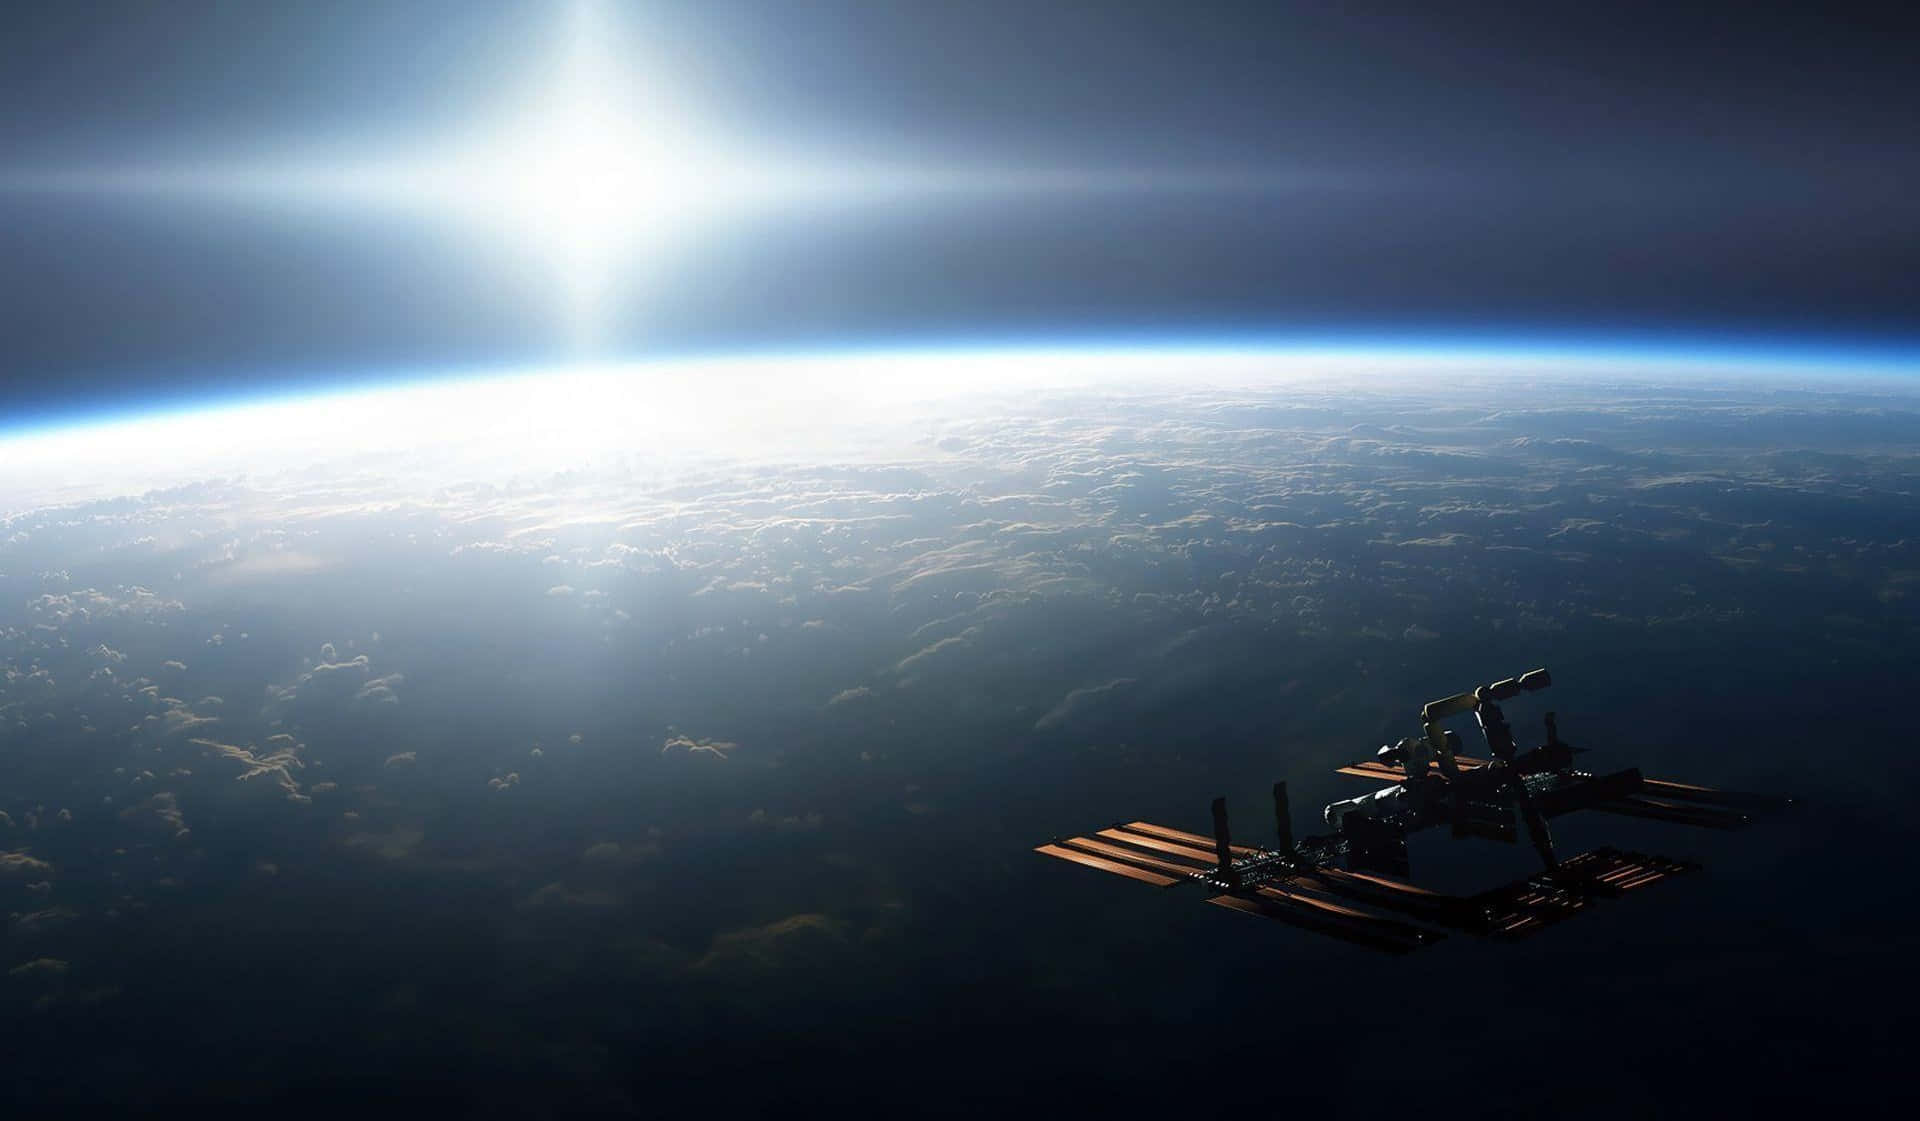 International Space Station in orbit around Earth Wallpaper